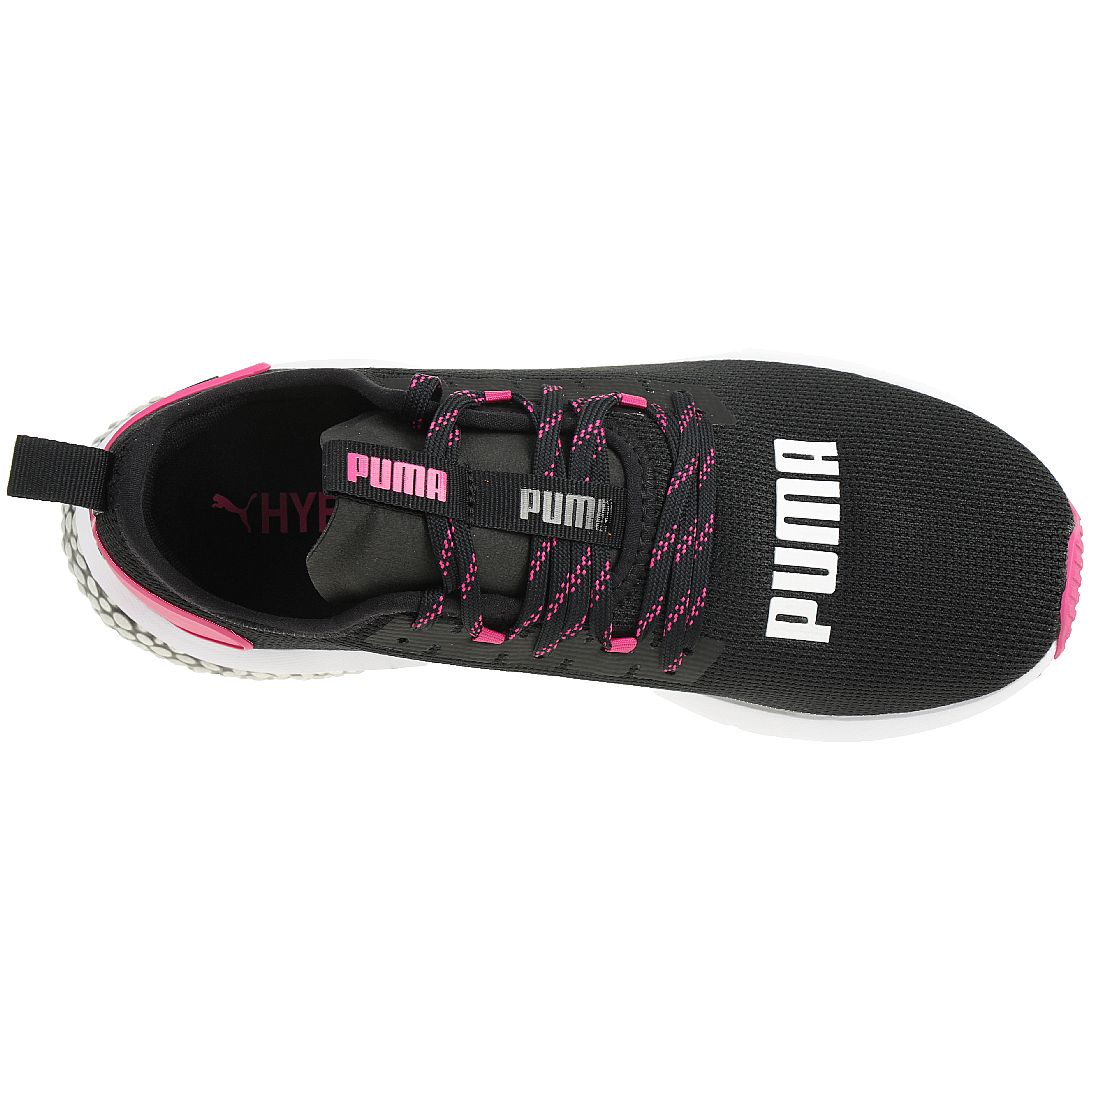 Puma Hybrid NX Wn Damen Sneaker Laufschuh Fitness schwarz pink 192268 04